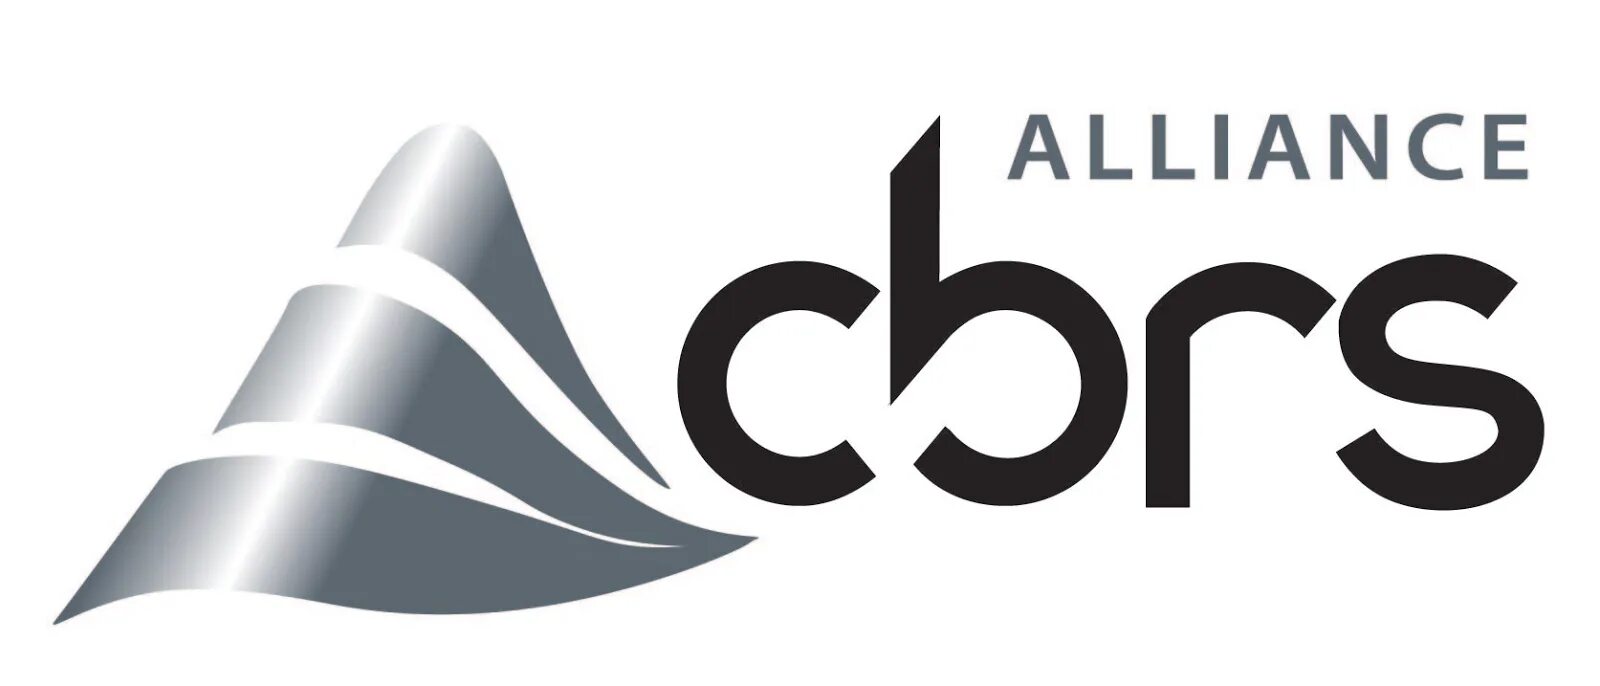 Ооо спектрум солюшнз. ДГЛ. CBRS logo. CBRS Group.